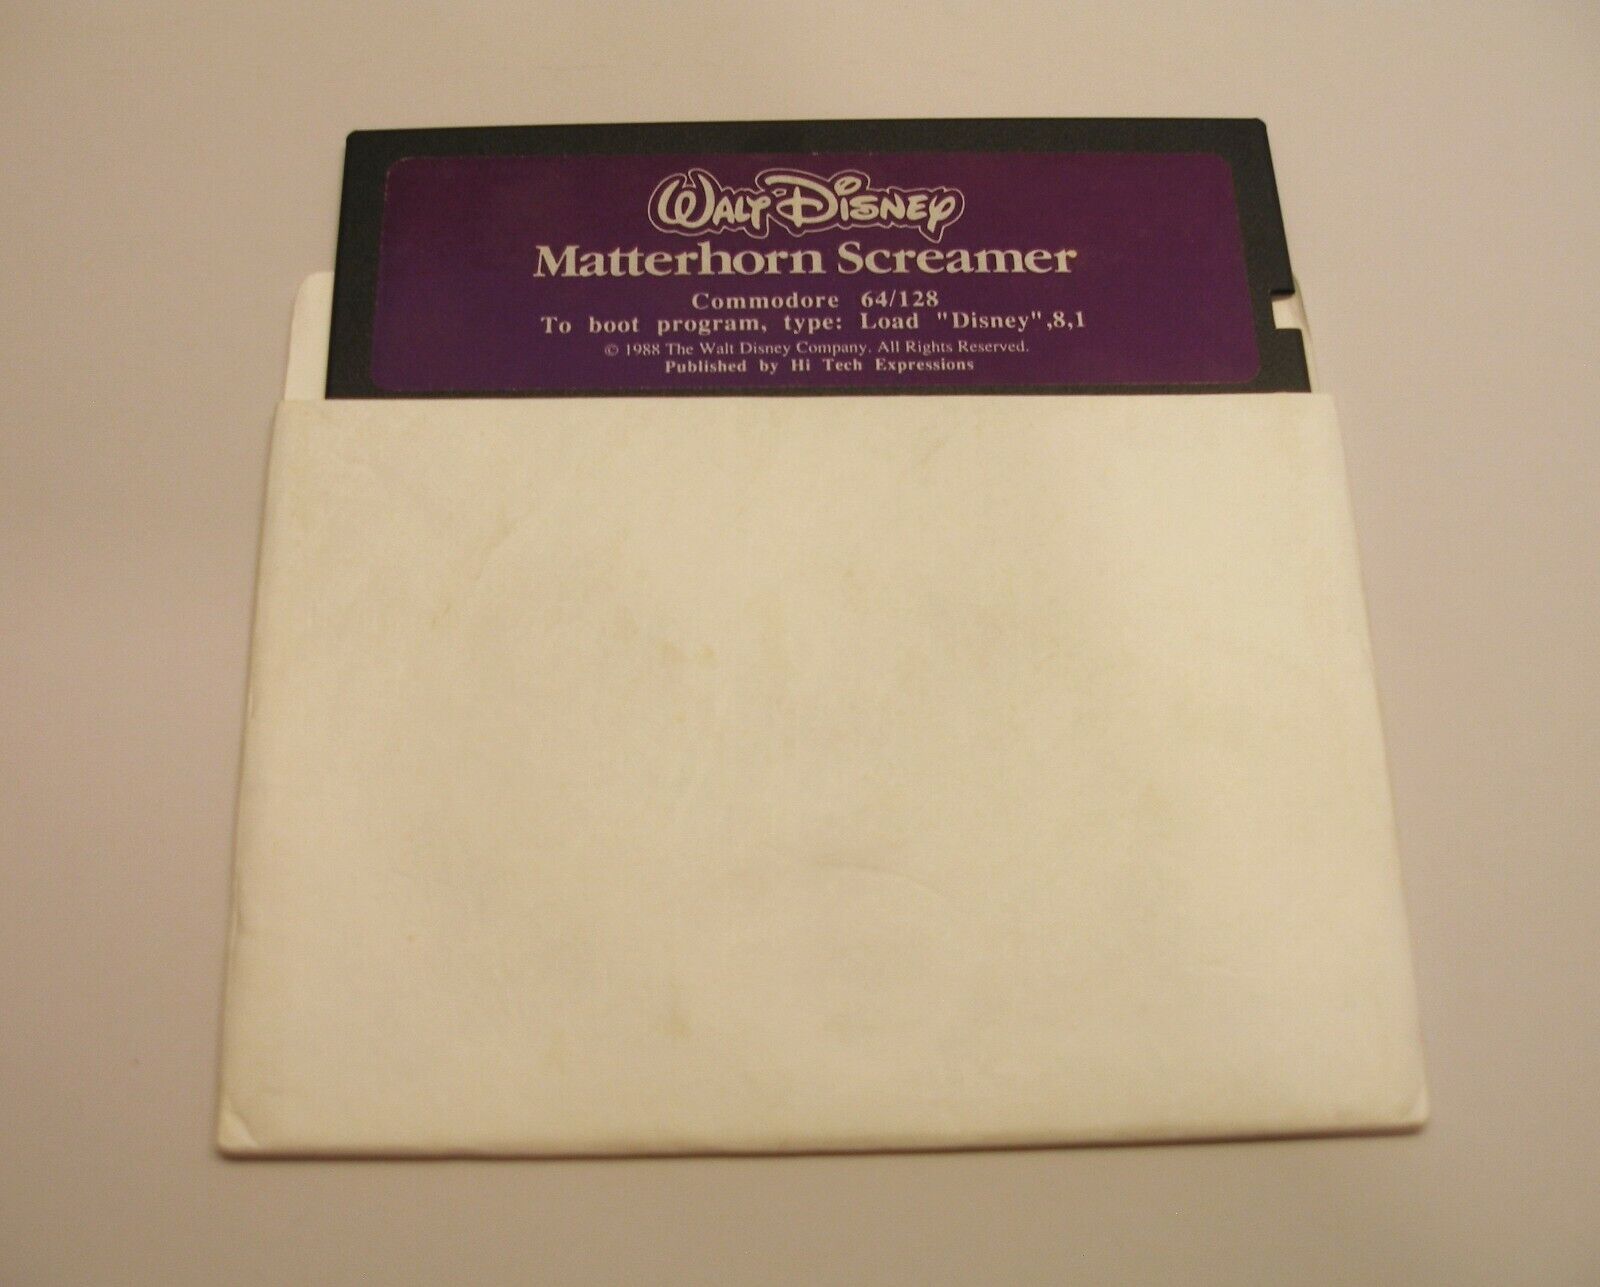 Matterhorn Screamer Disk/Instructions by Walt Disney for the Commodore 64/128